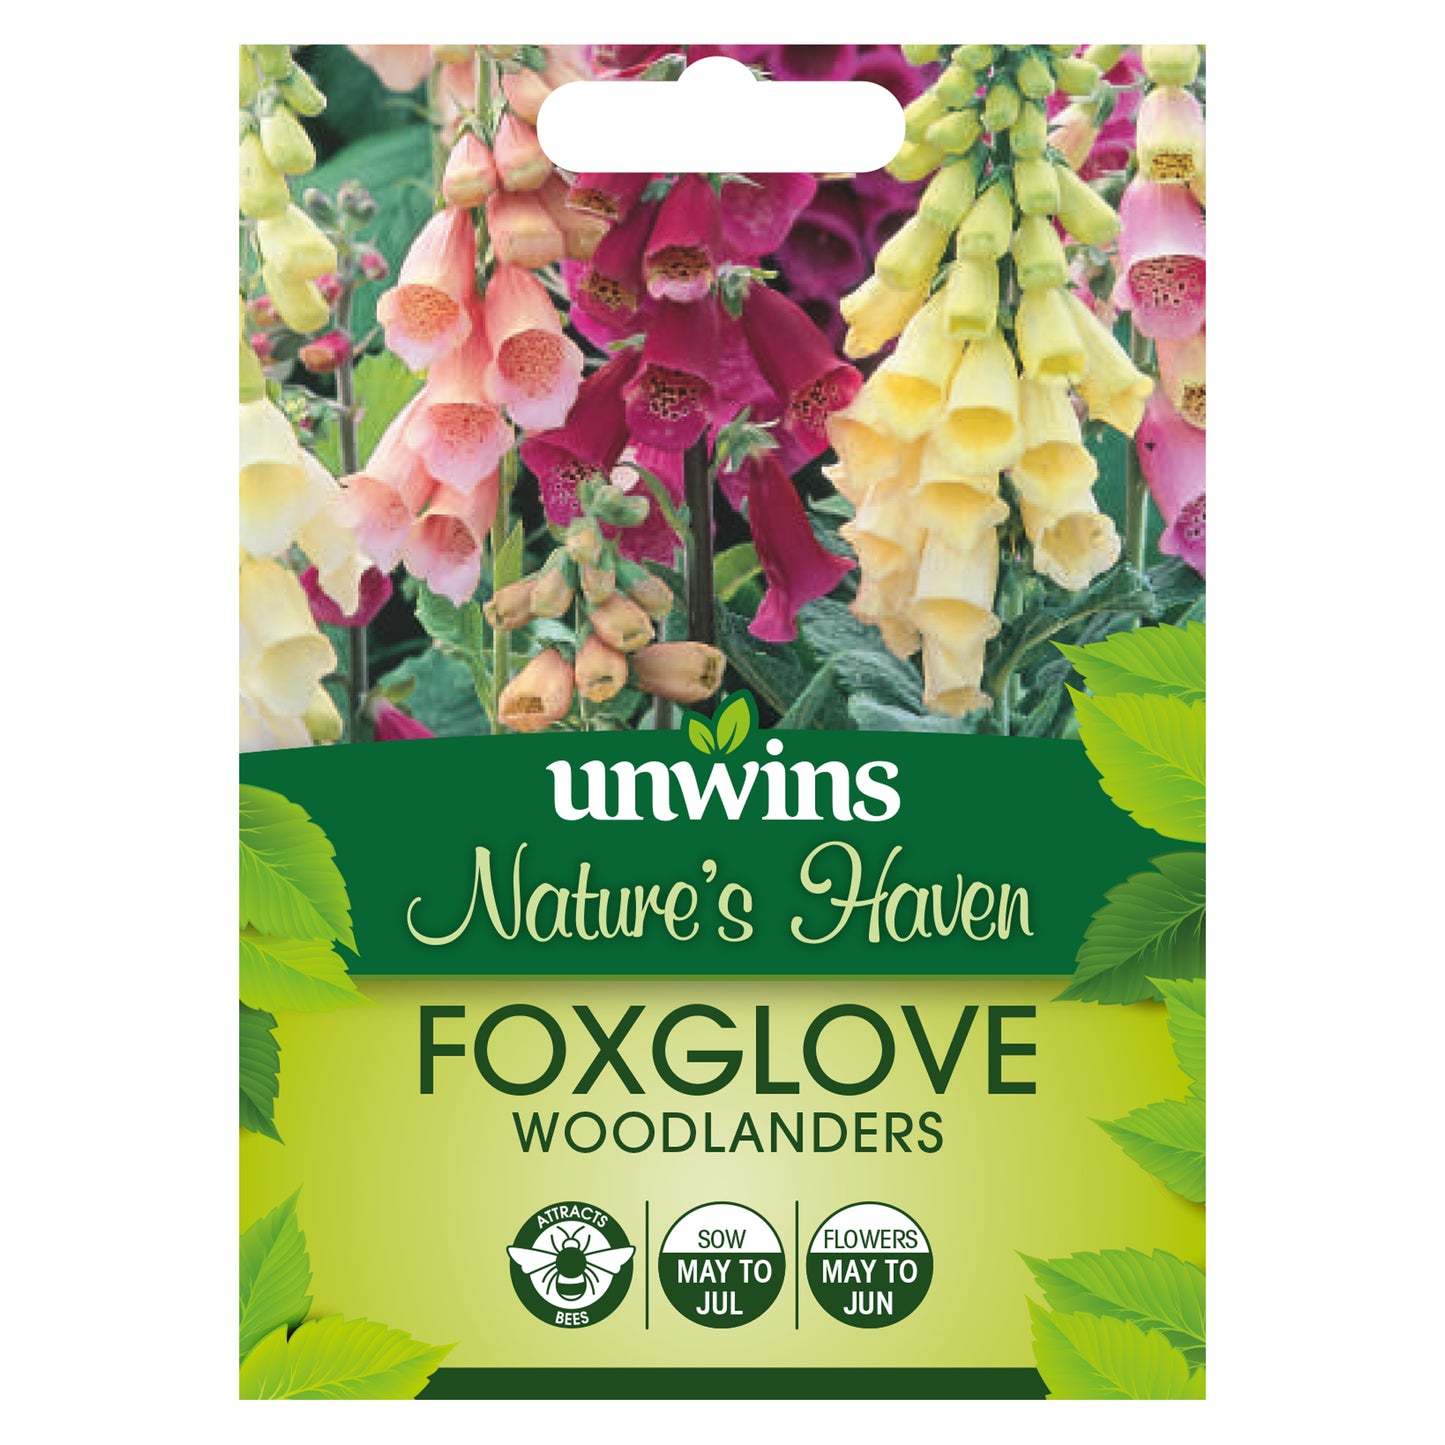 Nature's Haven Foxglove Woodlanders Seeds front of pack